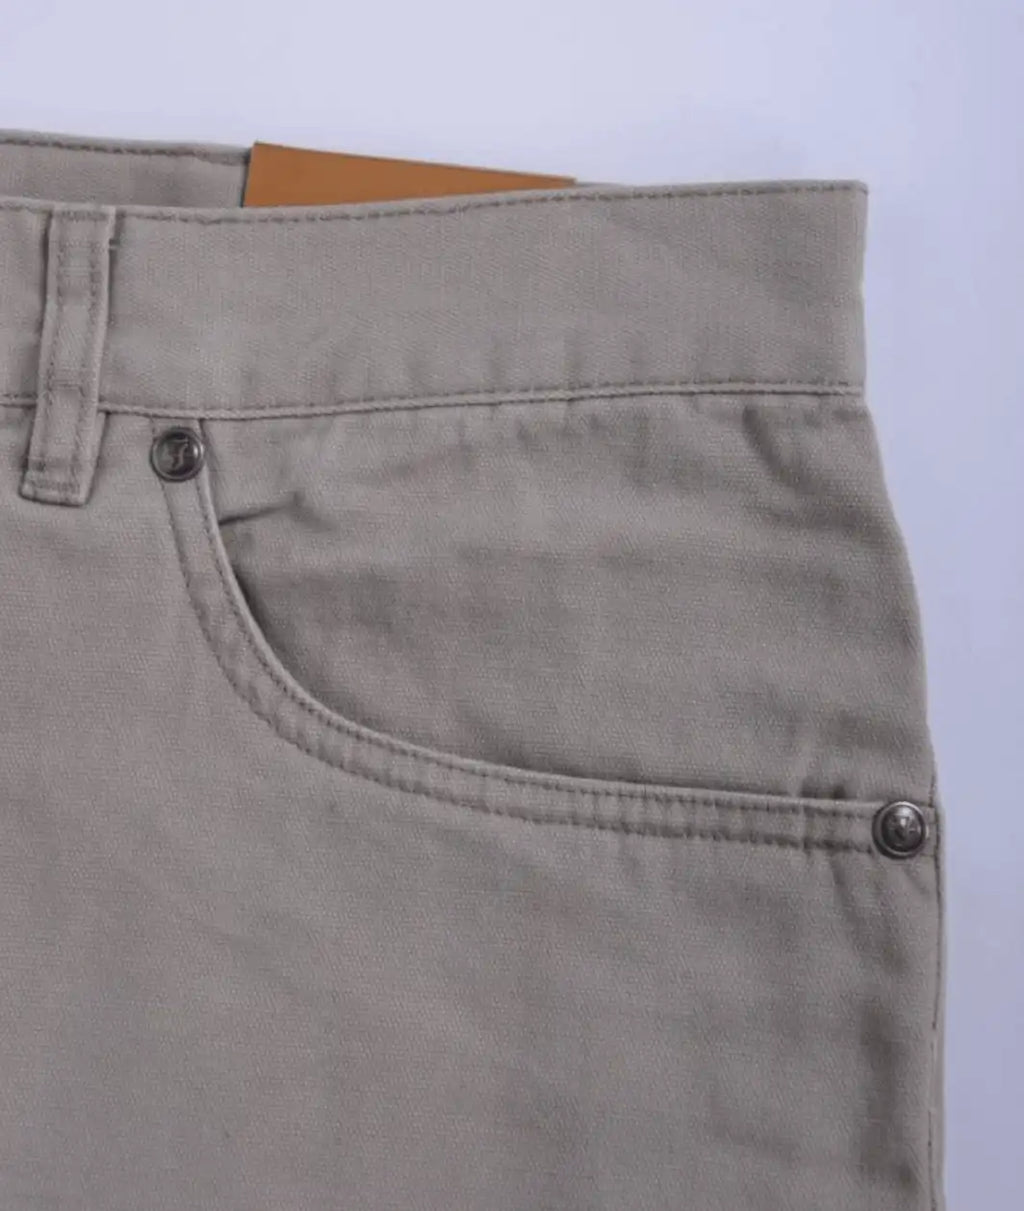 Farah Classic Grey Smart Mens Lightweight Trousers Size 34 X 33 ref 509115M  | eBay